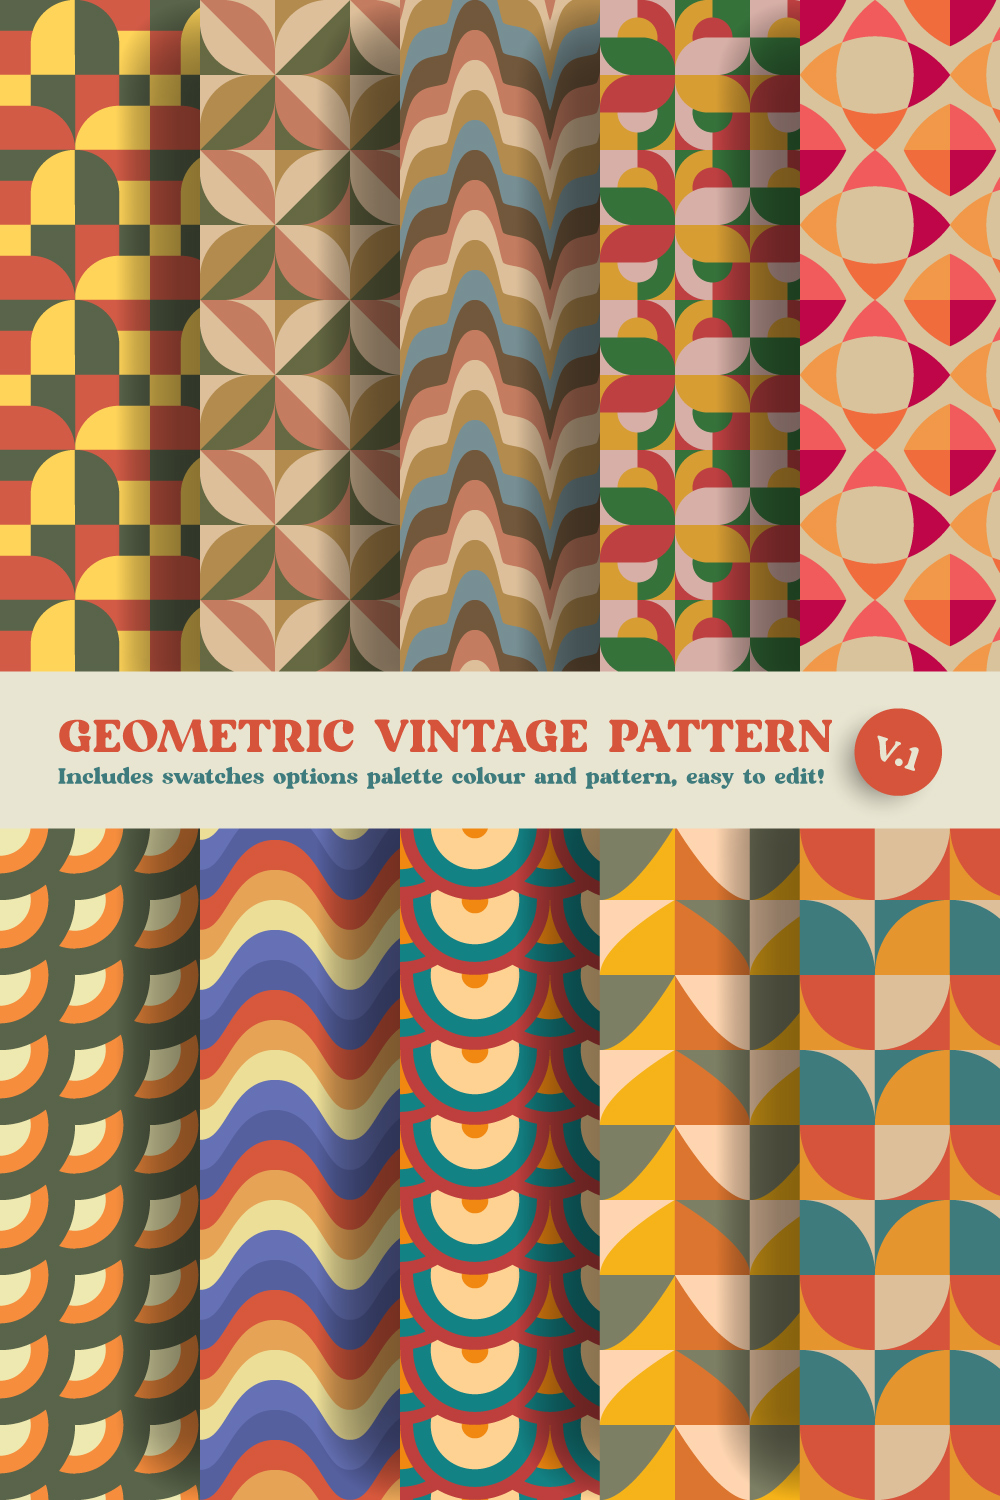 Vintage Geometric Patterns pinterest image.